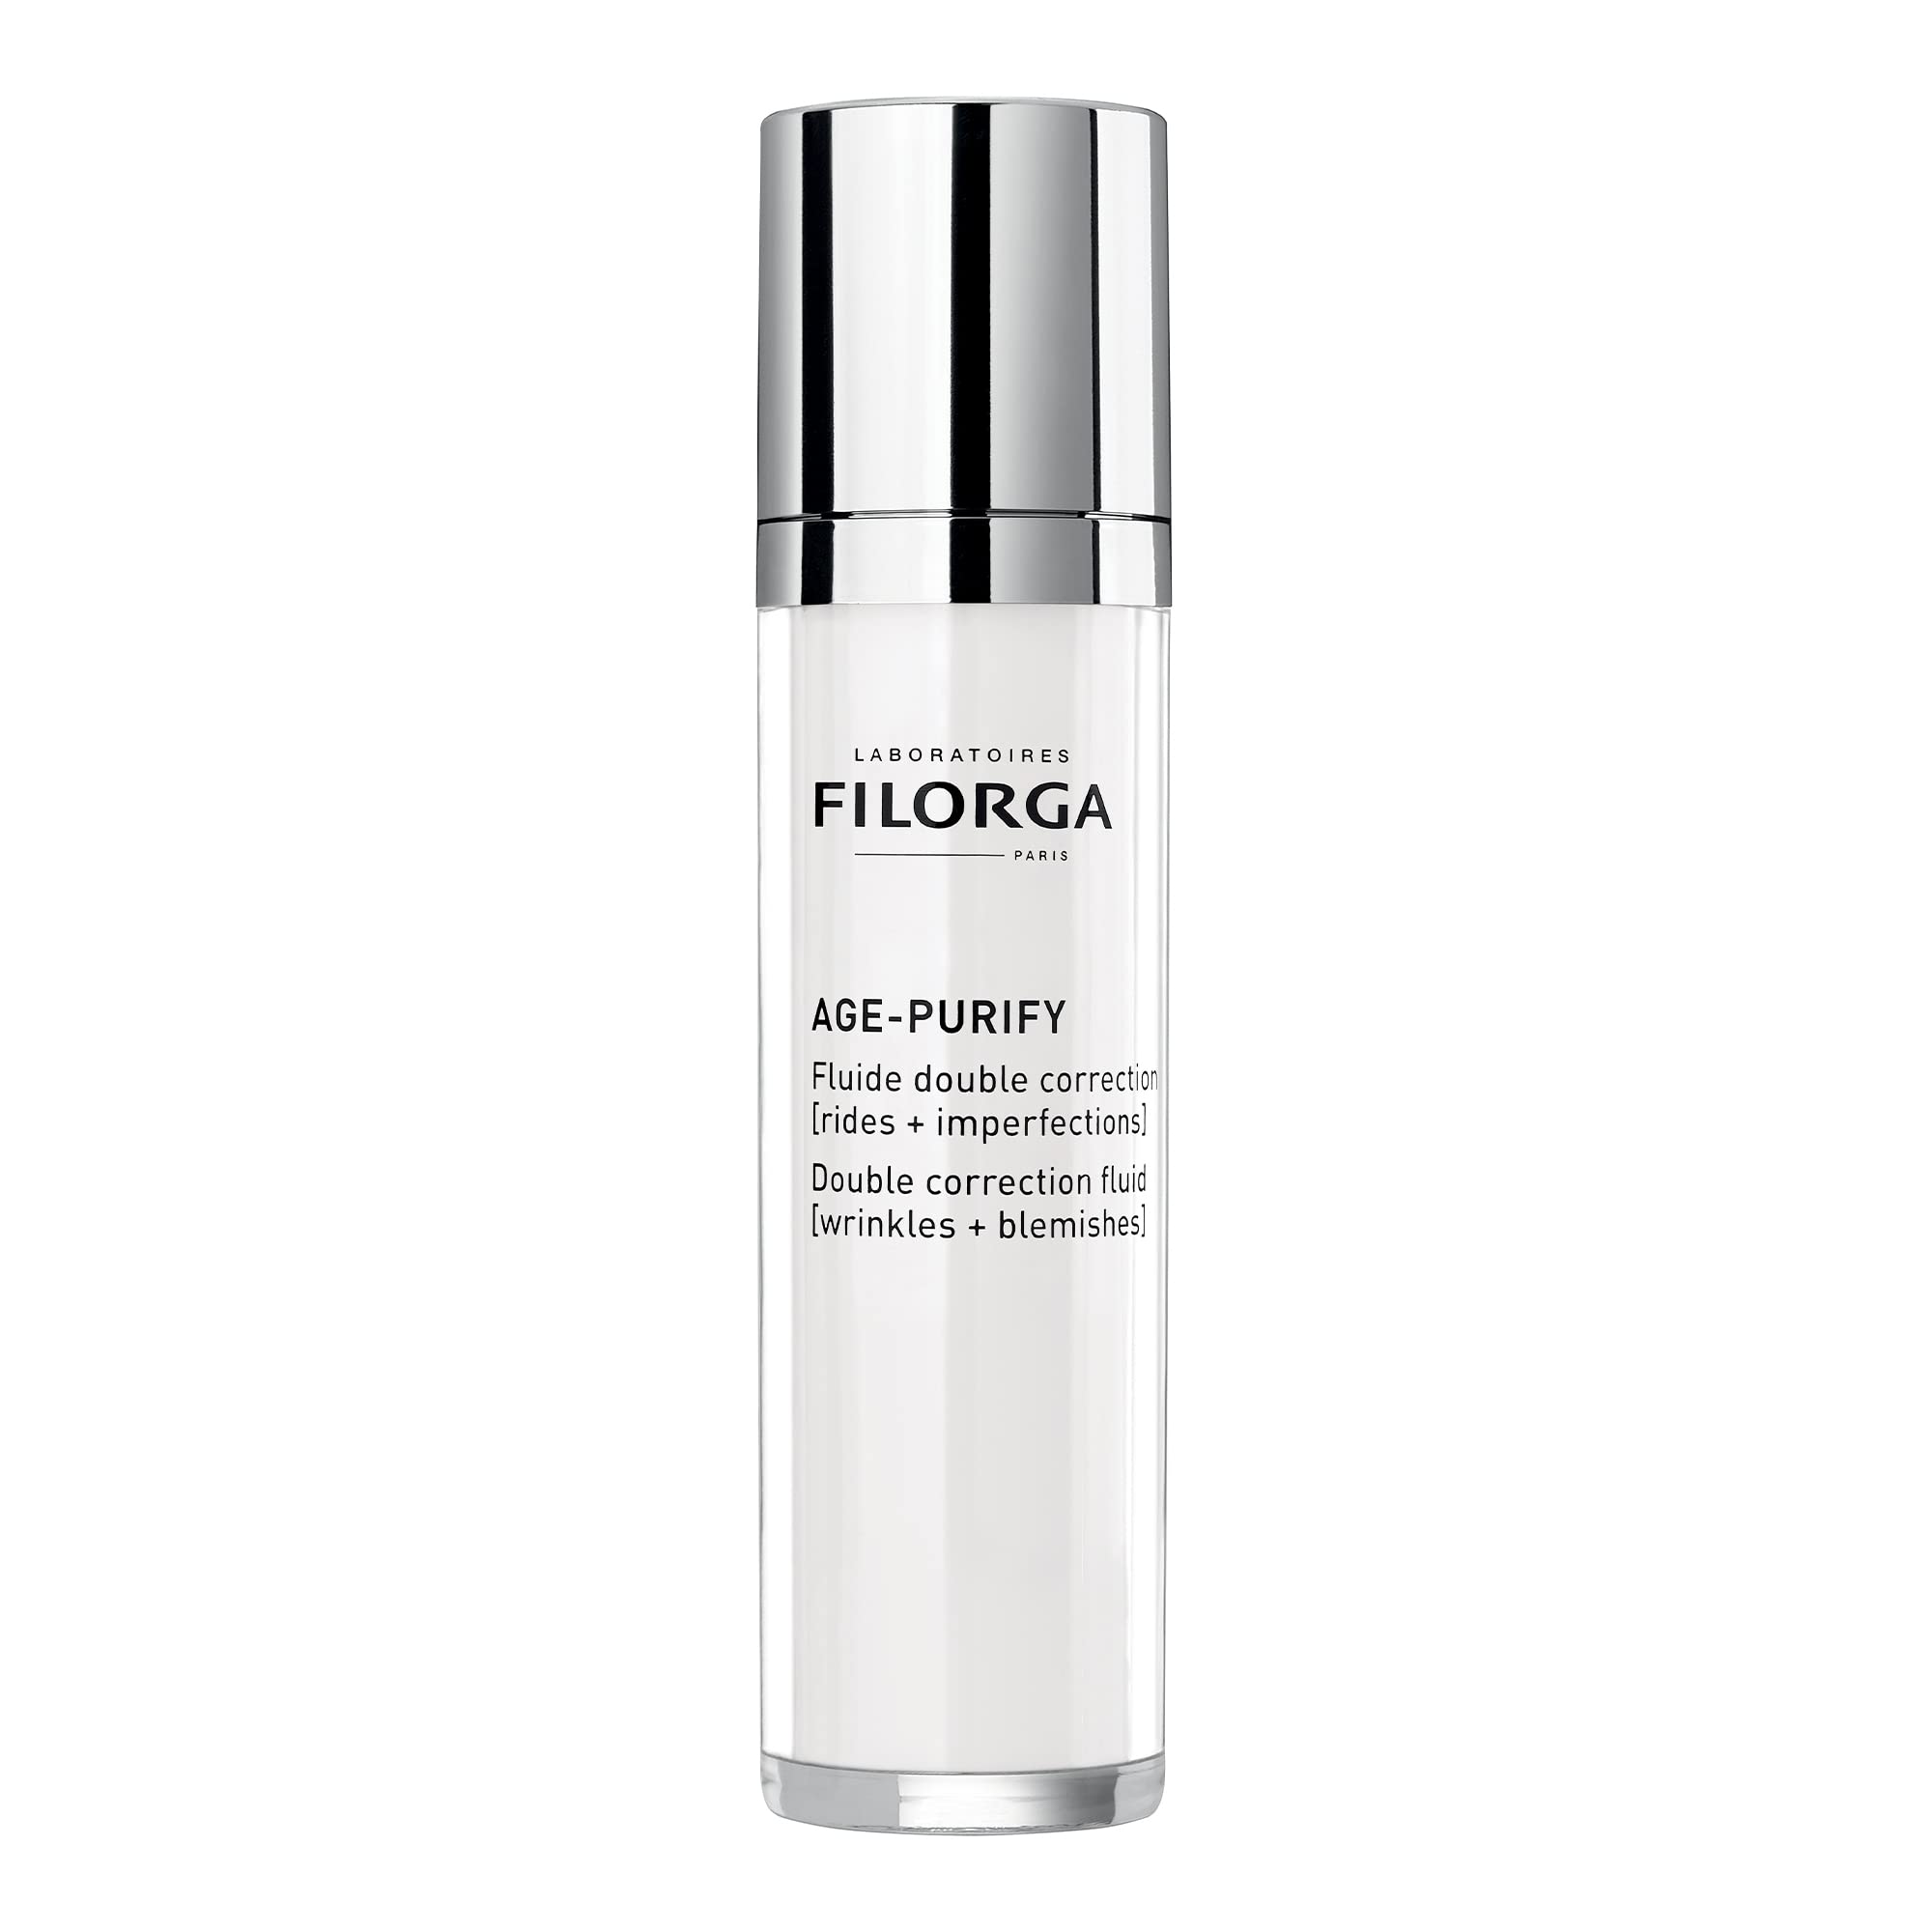 Filorga Age-Purify Fluide Serum 50ml